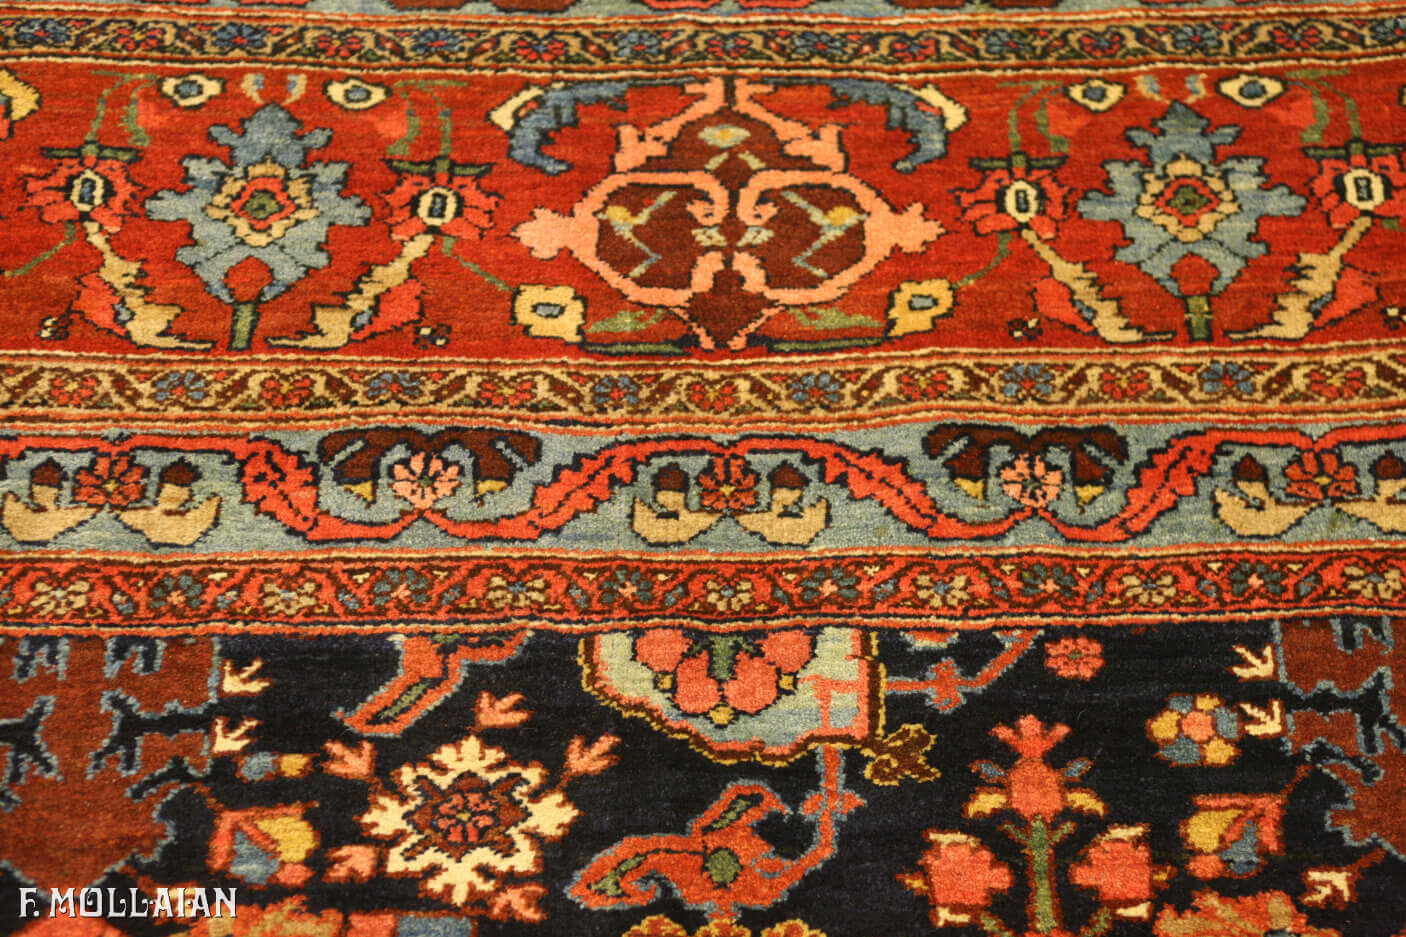 A Larg Antique Persian Bijar (Bidjar) Carpet n°:57847487